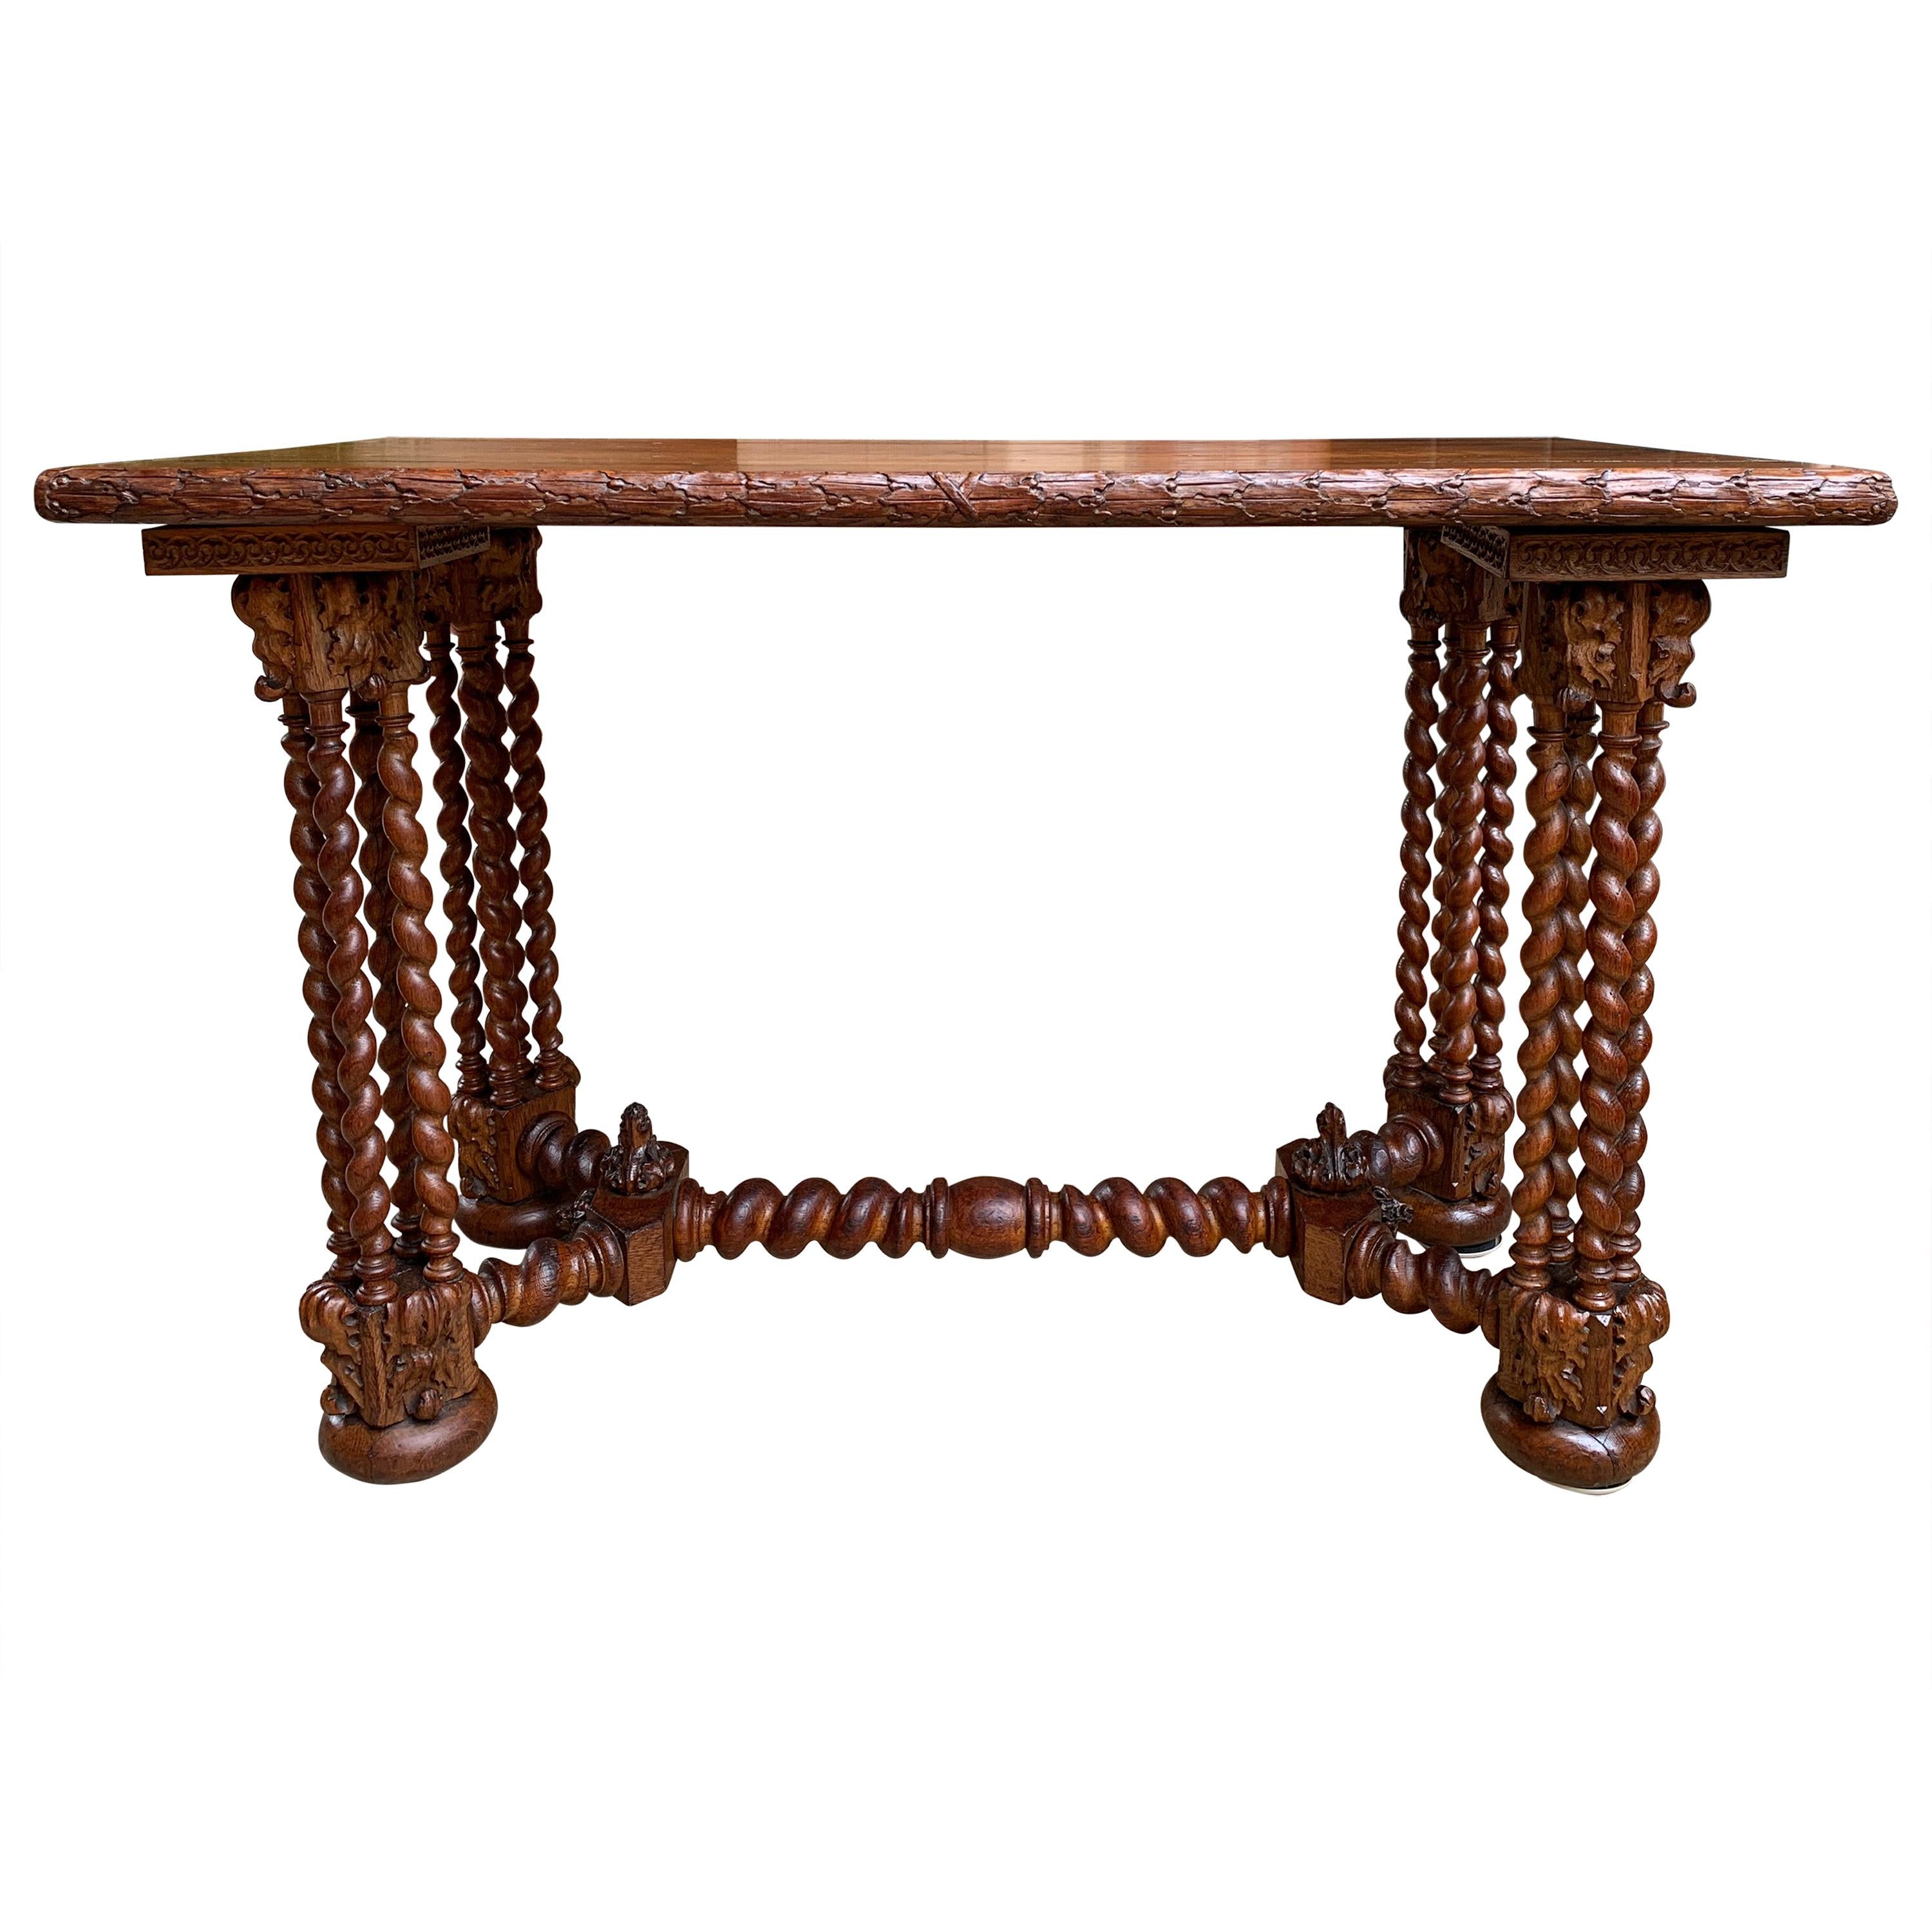 19th Century French Carved Oak Barley Twist Sofa Table Corinthian Renaissance